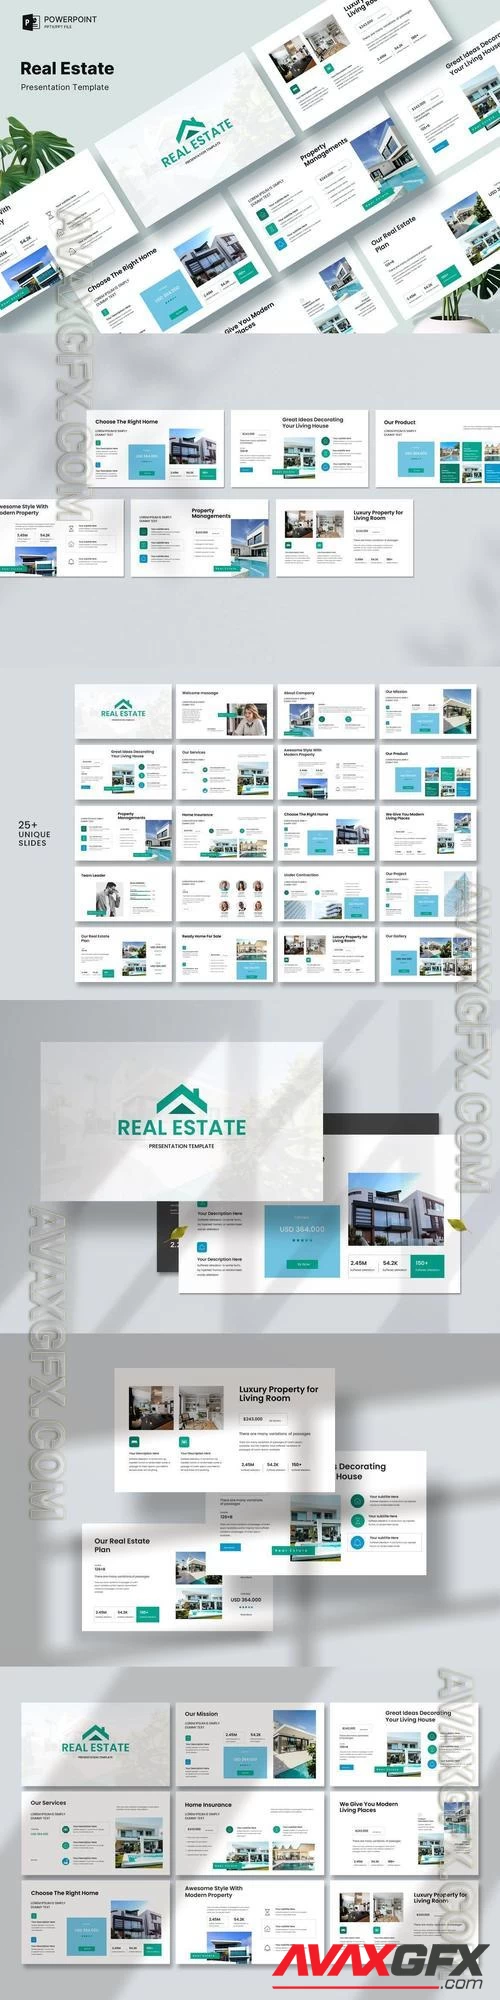 Real Estate Presentation Template